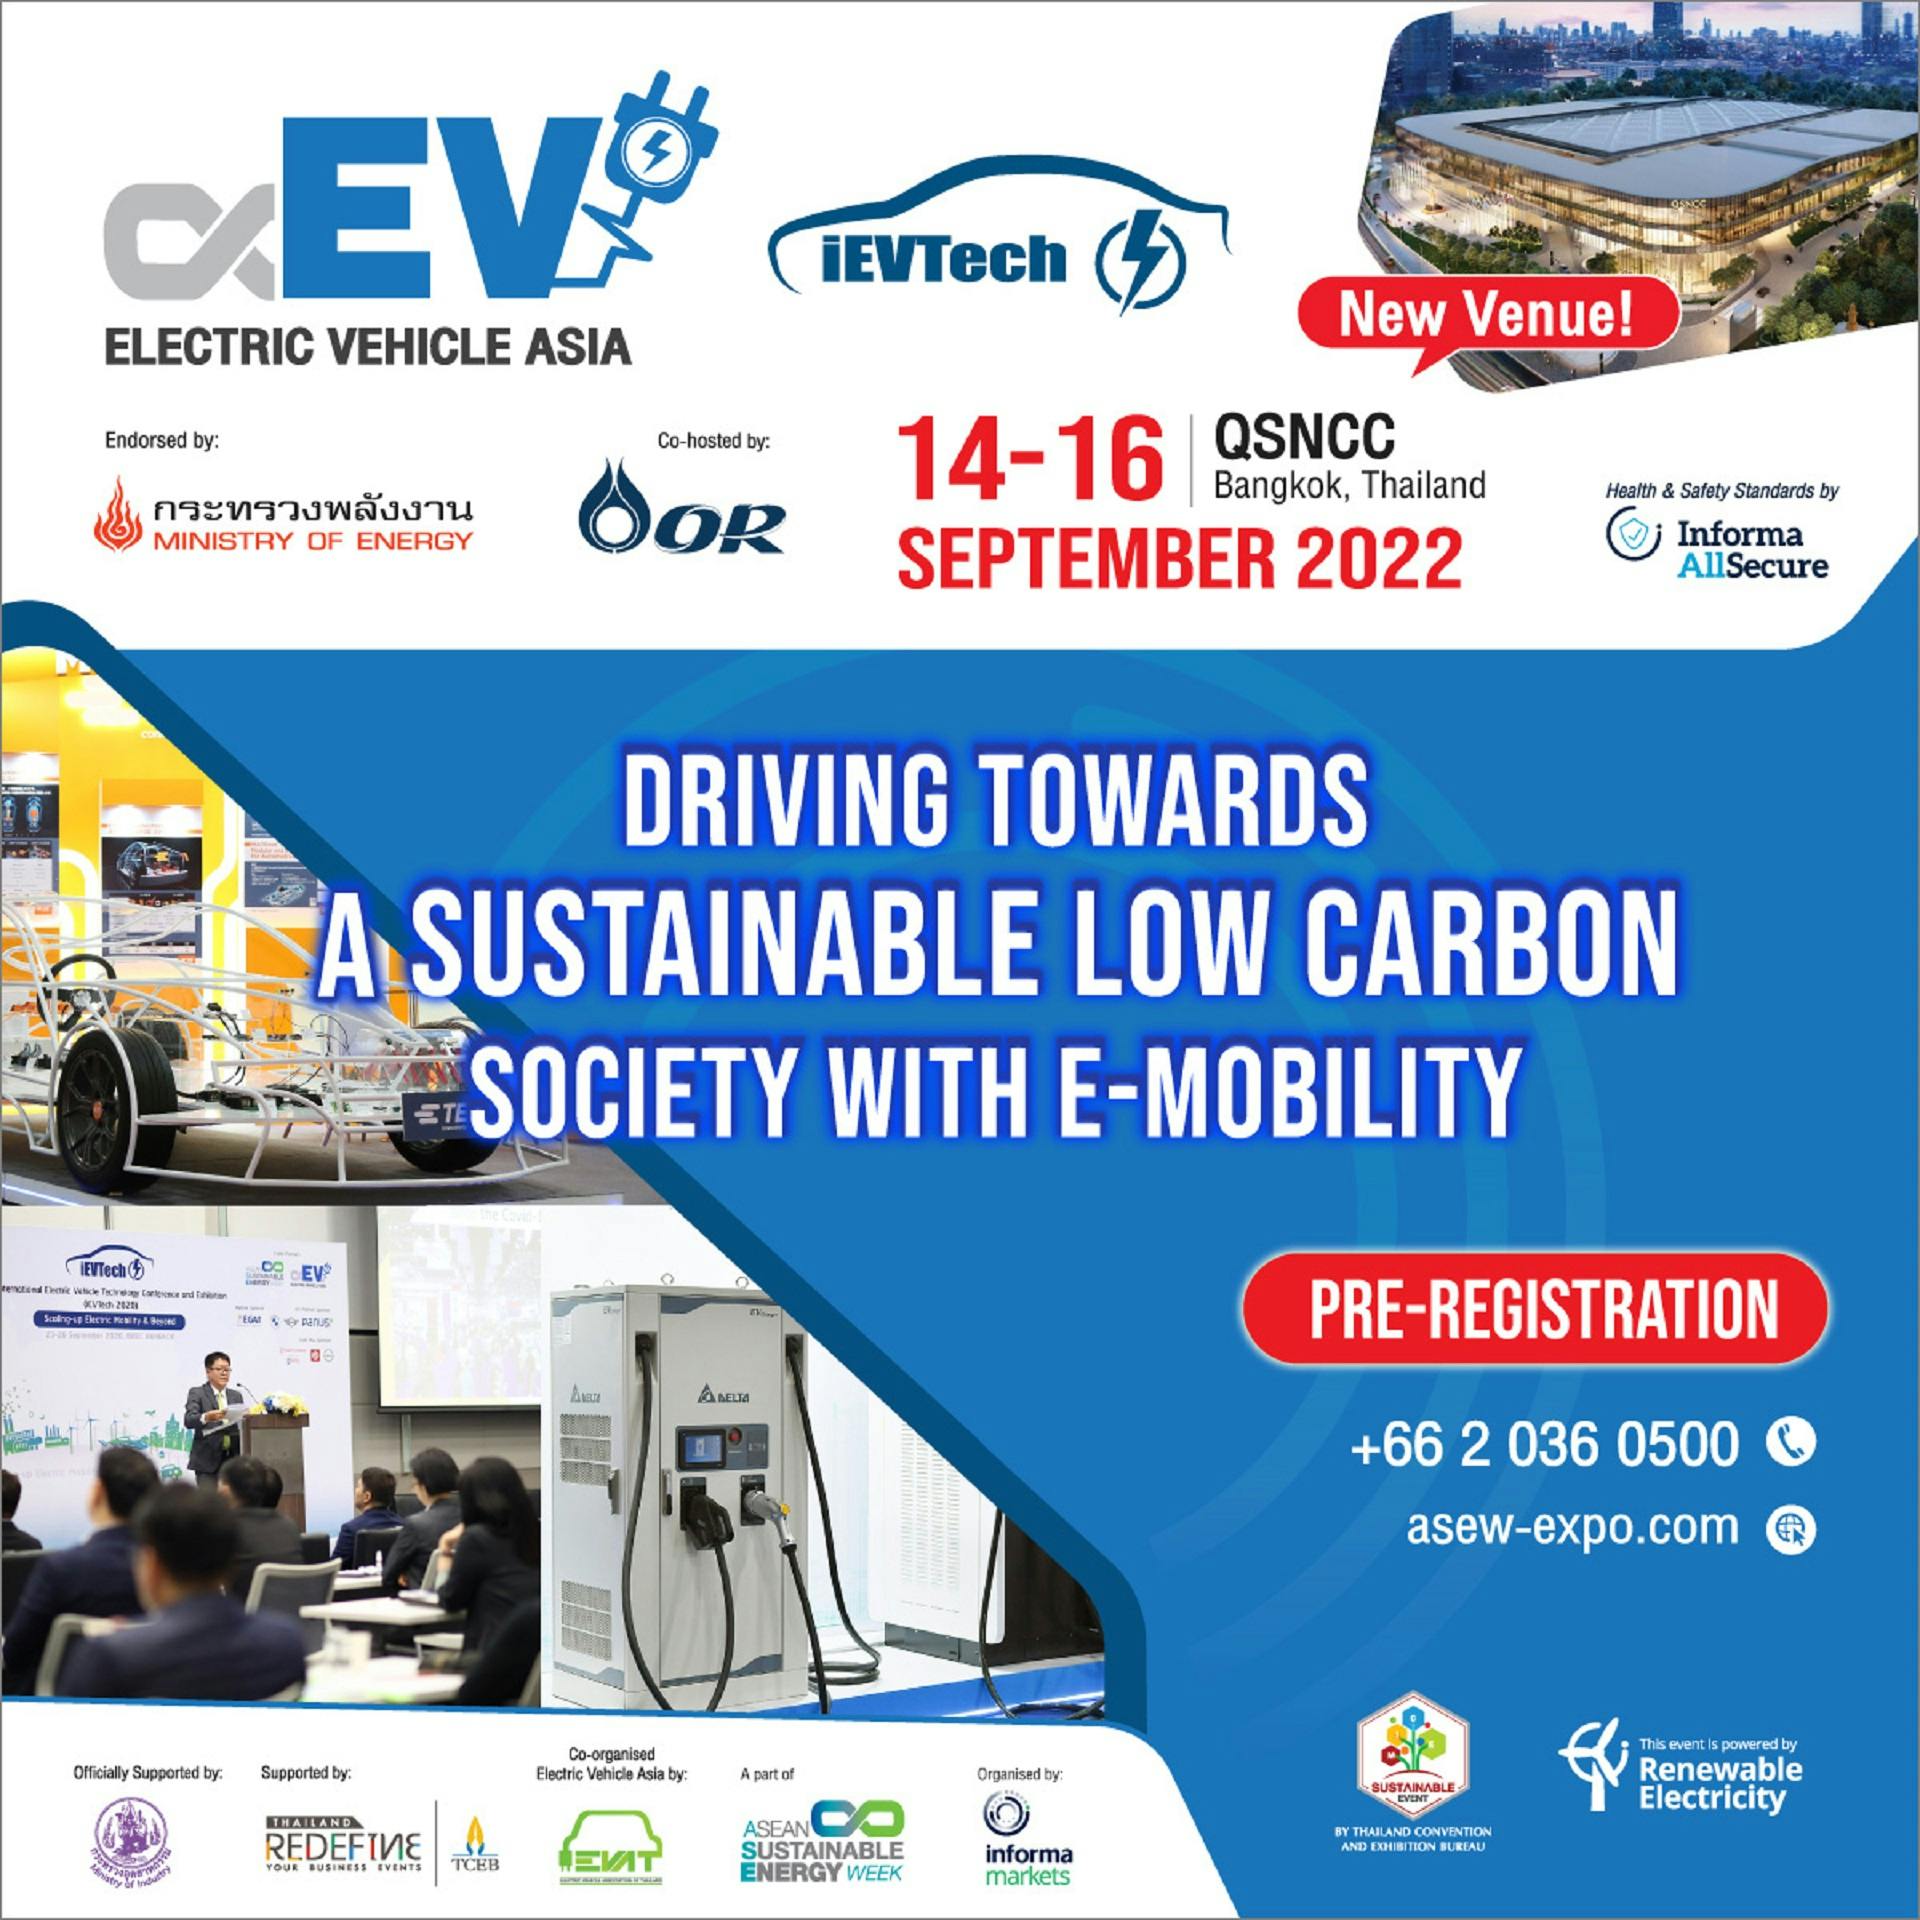 Electric Vehicle Asia (EVA) 2022